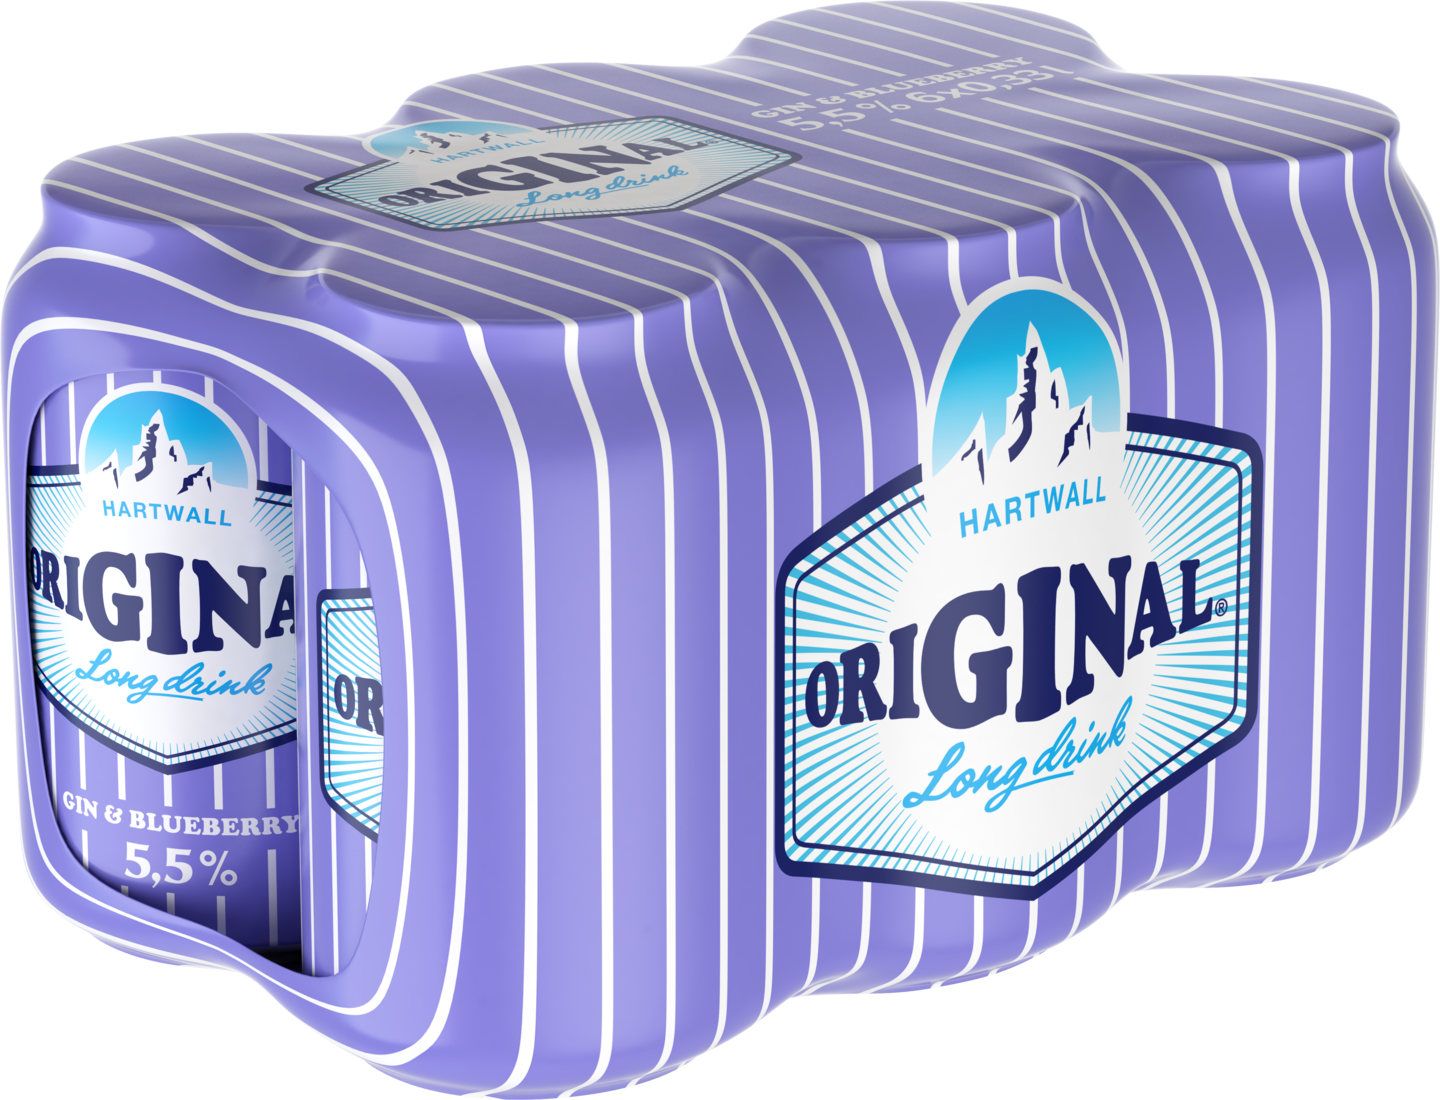 Hartwall Original Long Drink Blueberry 5,5% 0,33l 6-pack